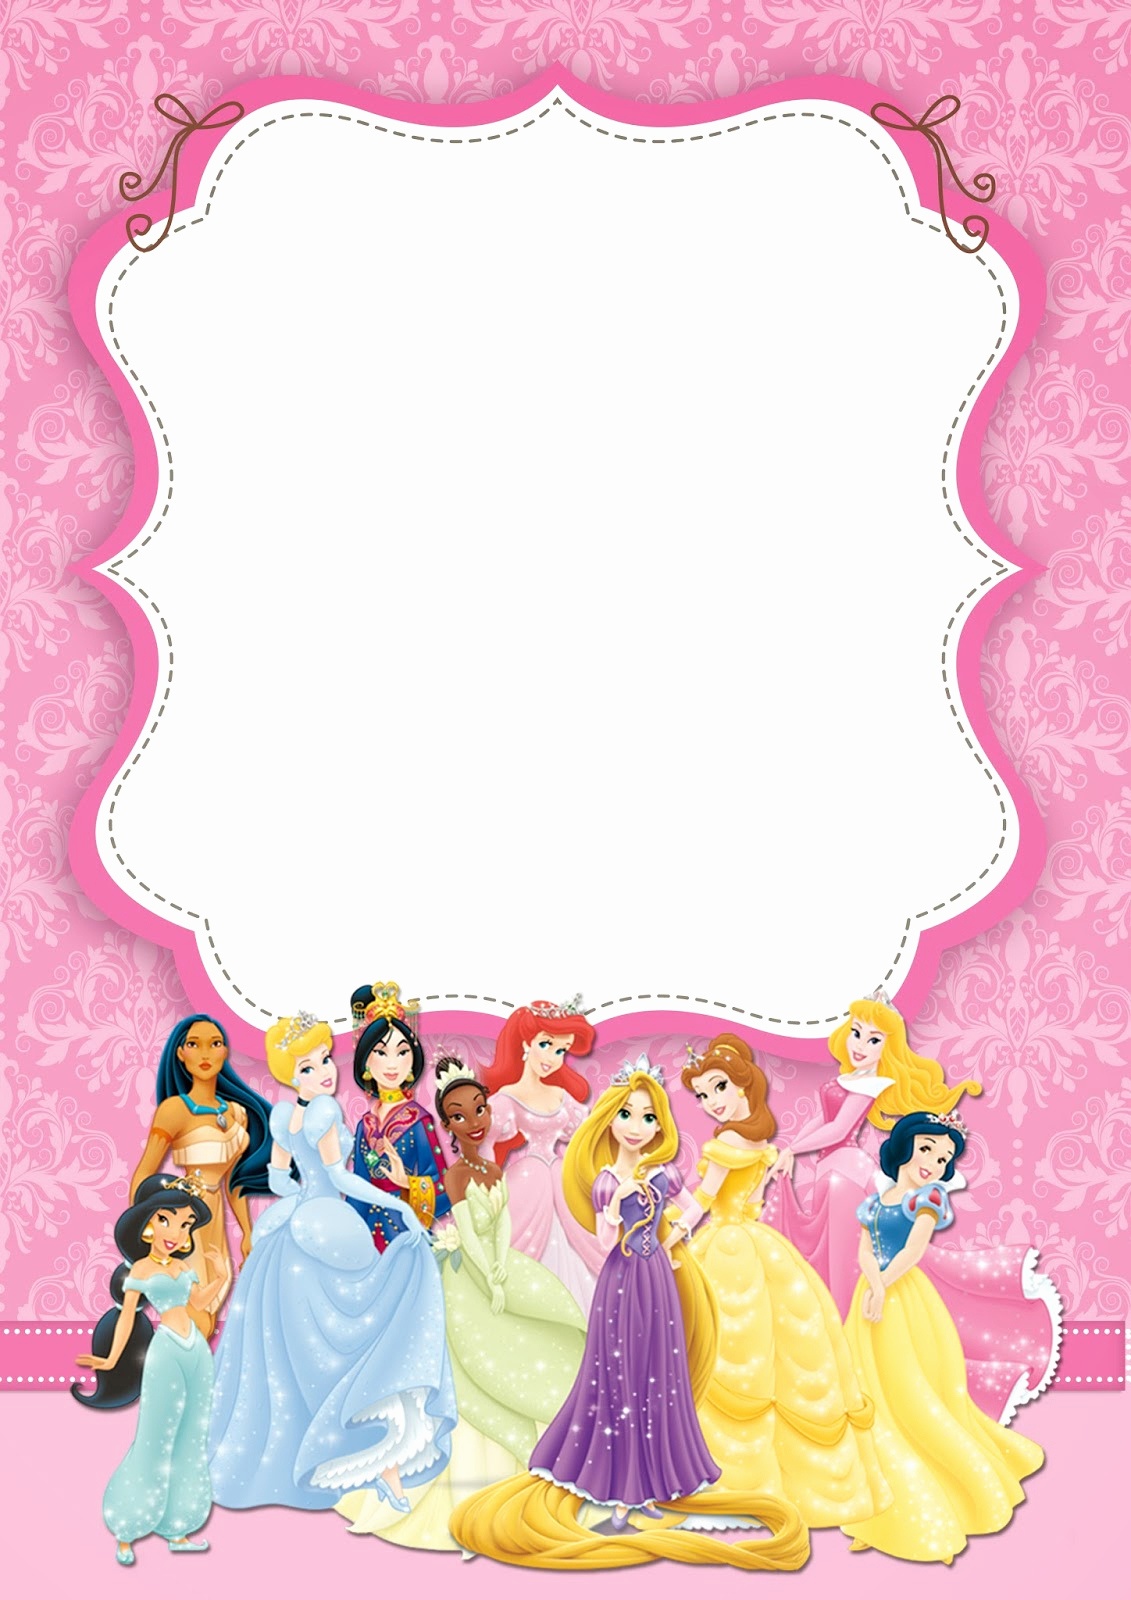 Free Disney Princess Invitation Template Lovely Free Printable Disney Princess Ticket Invitation Template